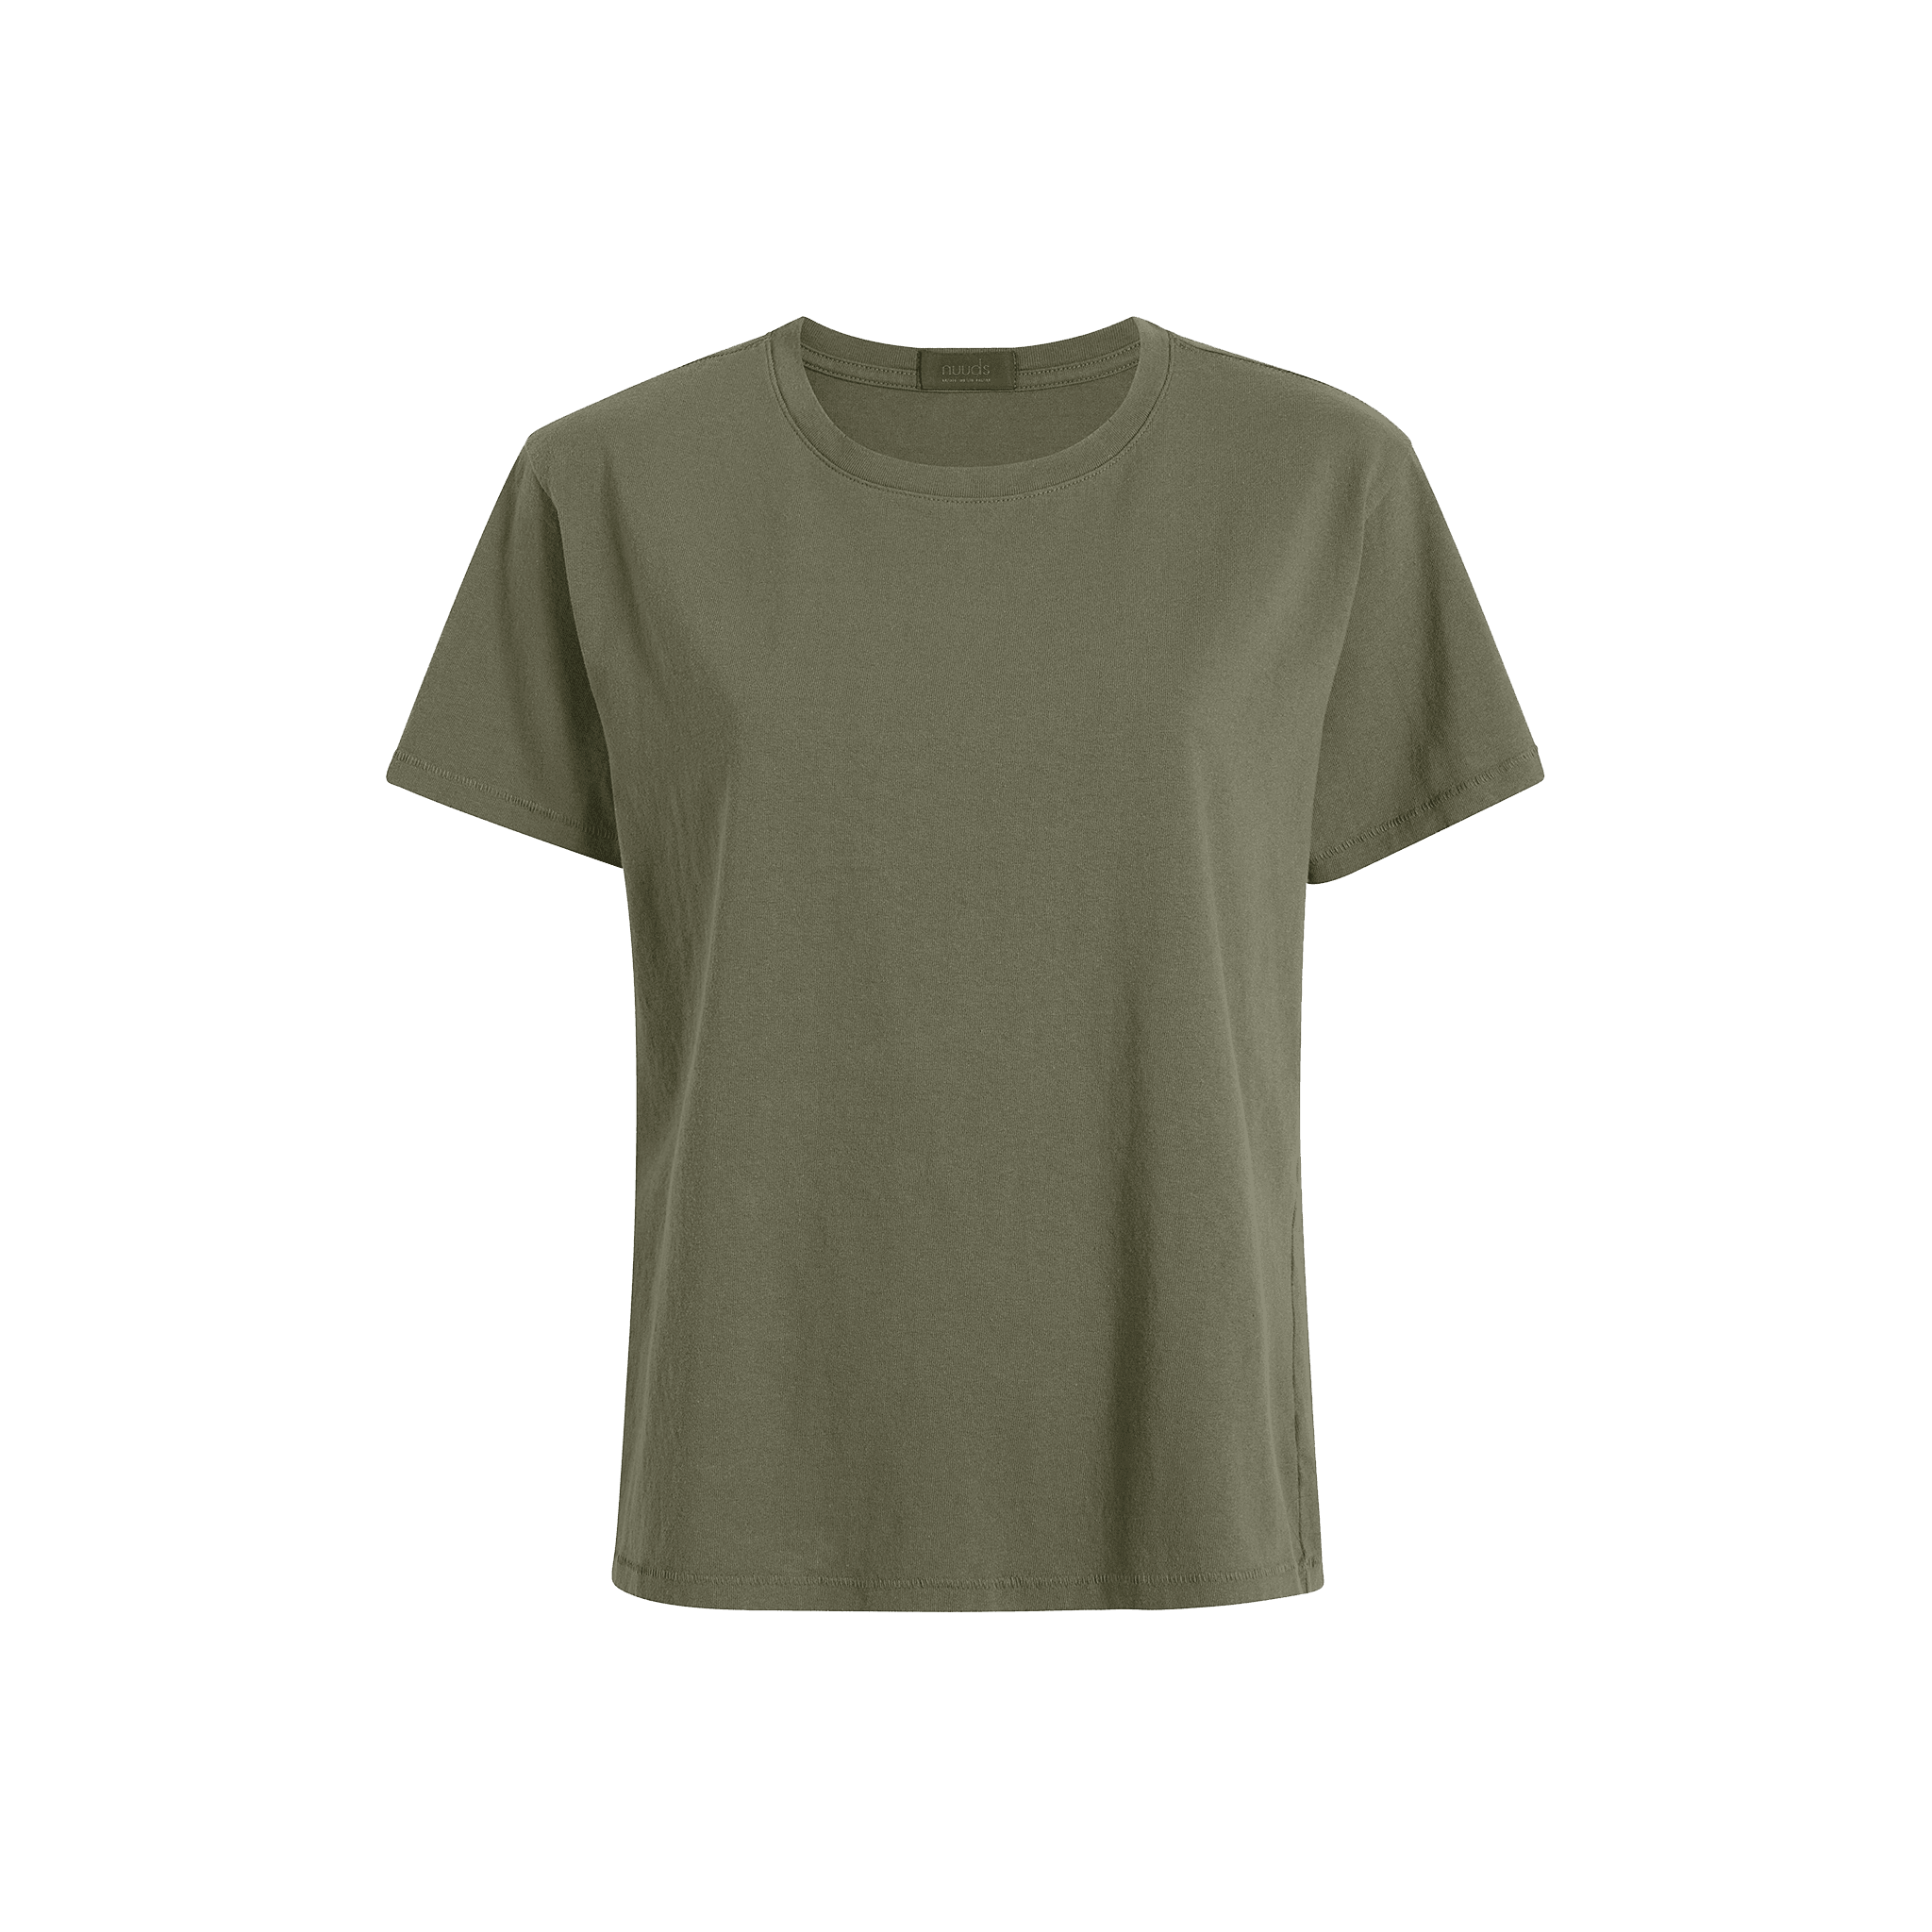 Nuuds everyday t-shirt - Gem